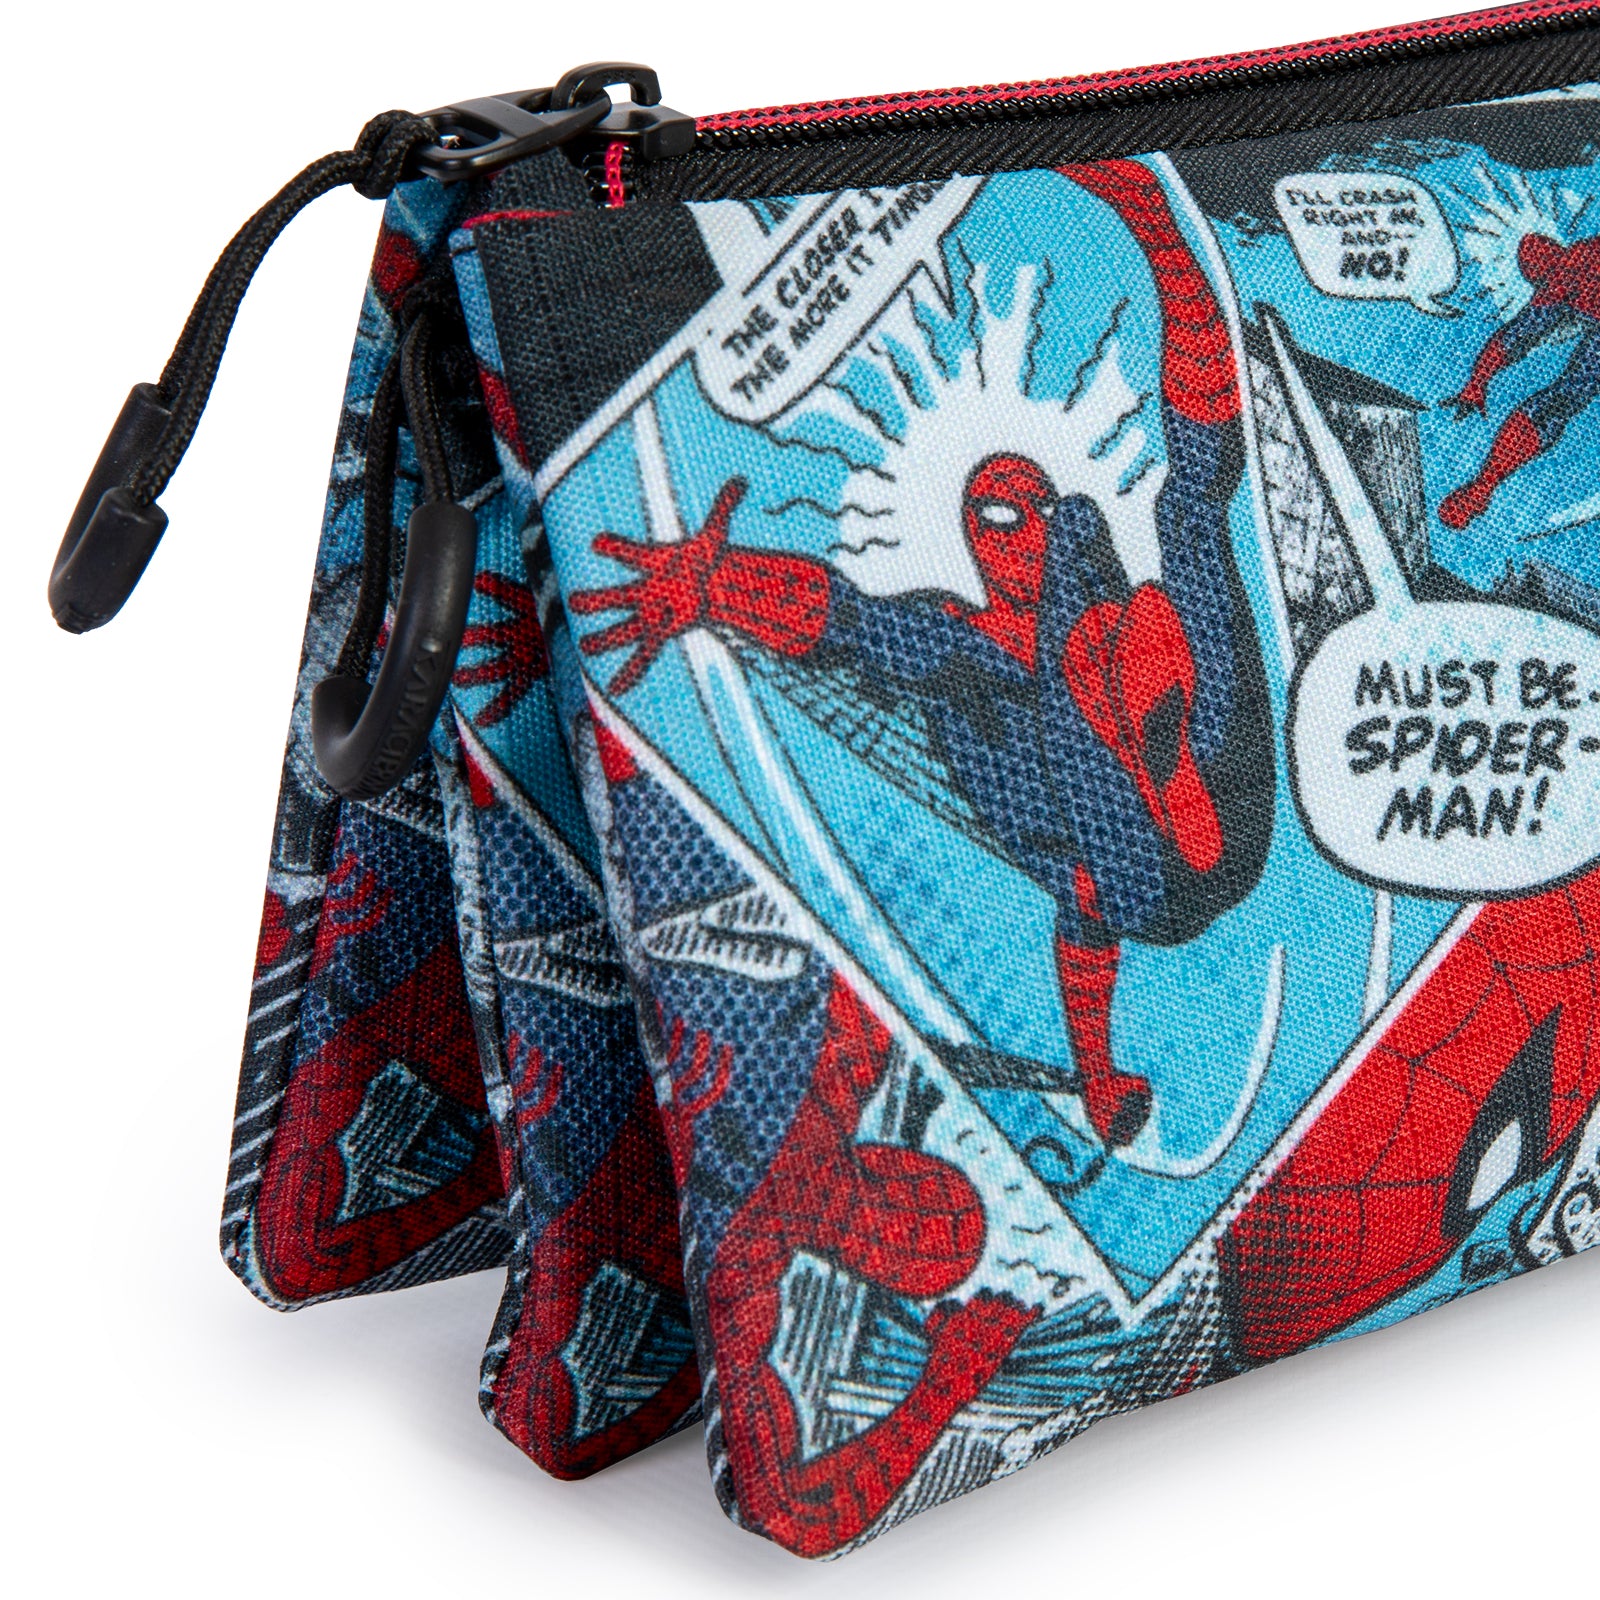 MARVEL Spiderman - Estuche Escolar Triple Portatodo con 2 Cremalleras. Brush